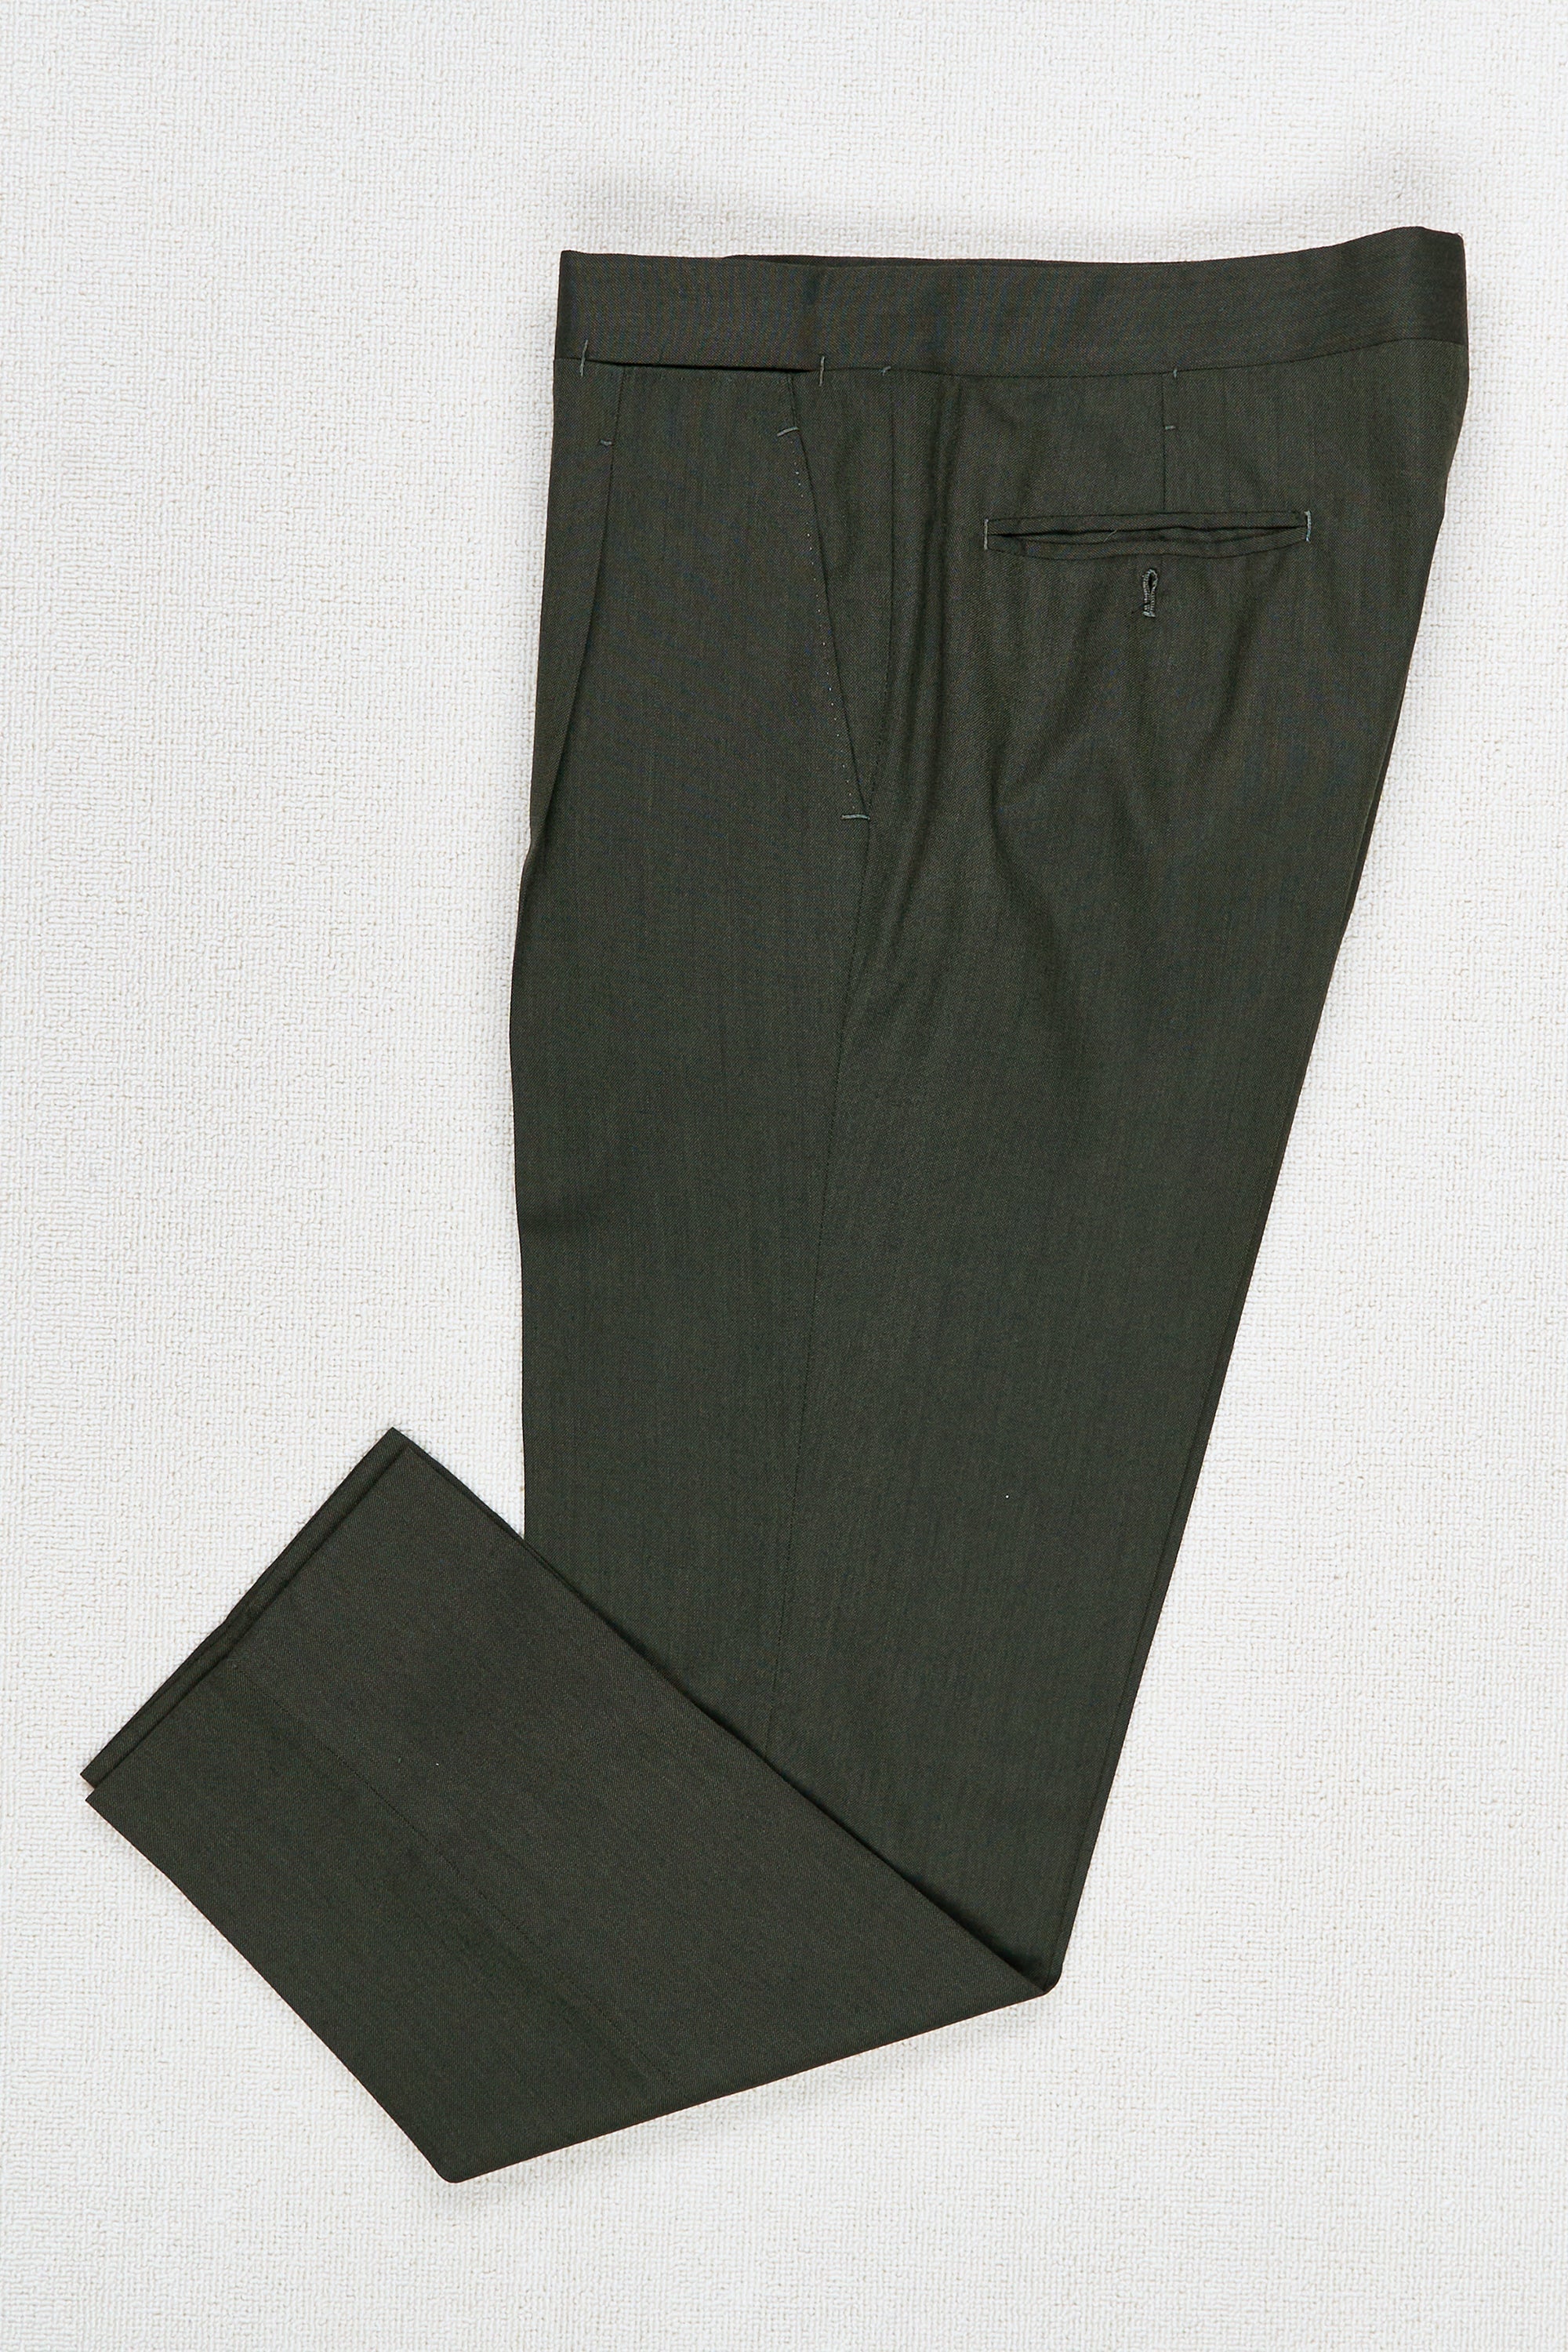 S3 Single Pleat Trousers / Donegal Tweed | Scavini